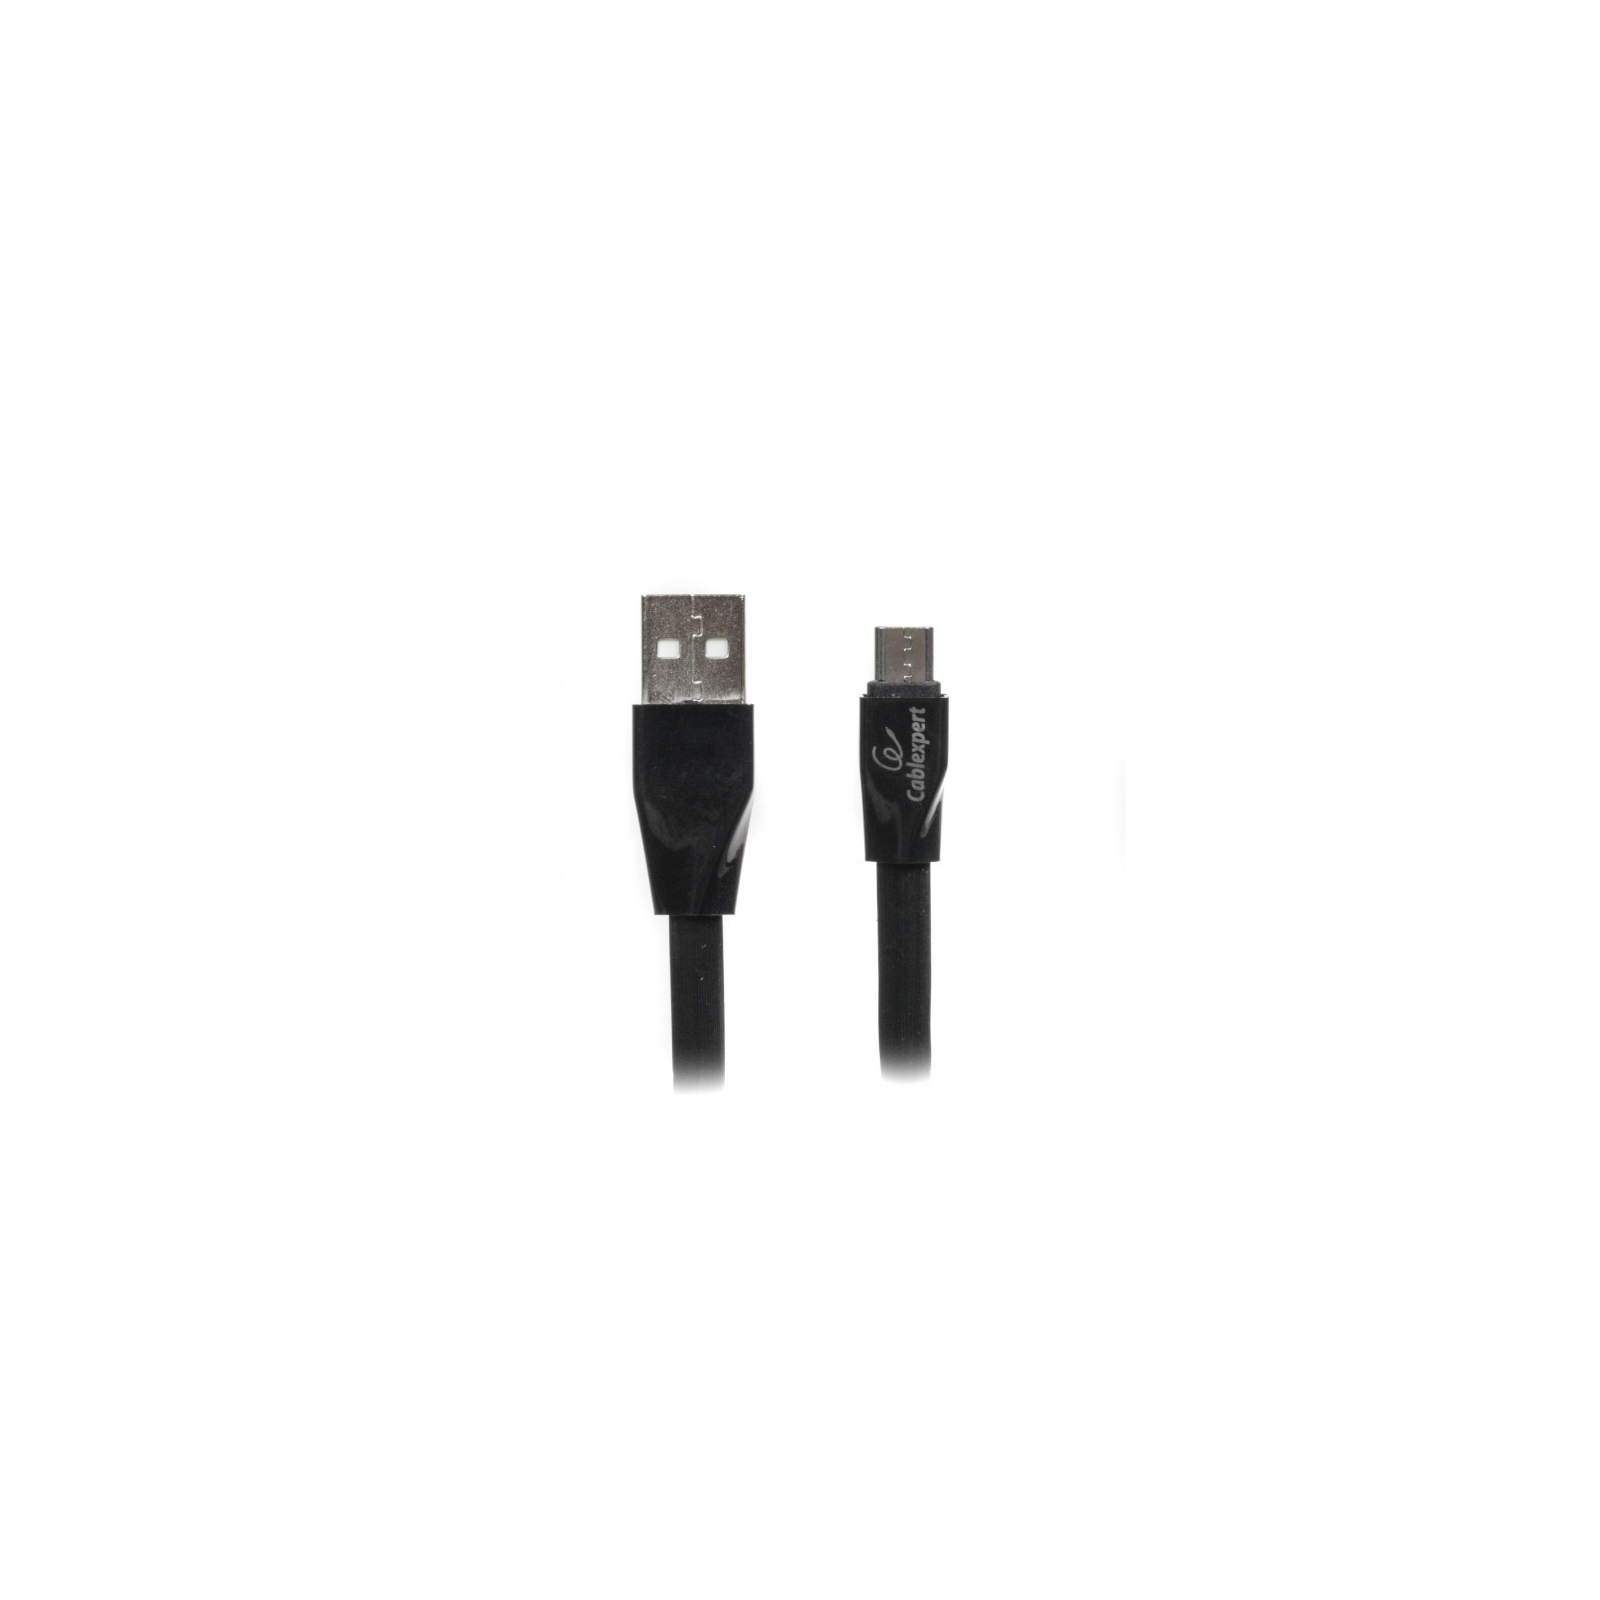 Дата кабель USB 2.0 Micro 5P to AM Cablexpert (CCPB-M-USB-01BK)